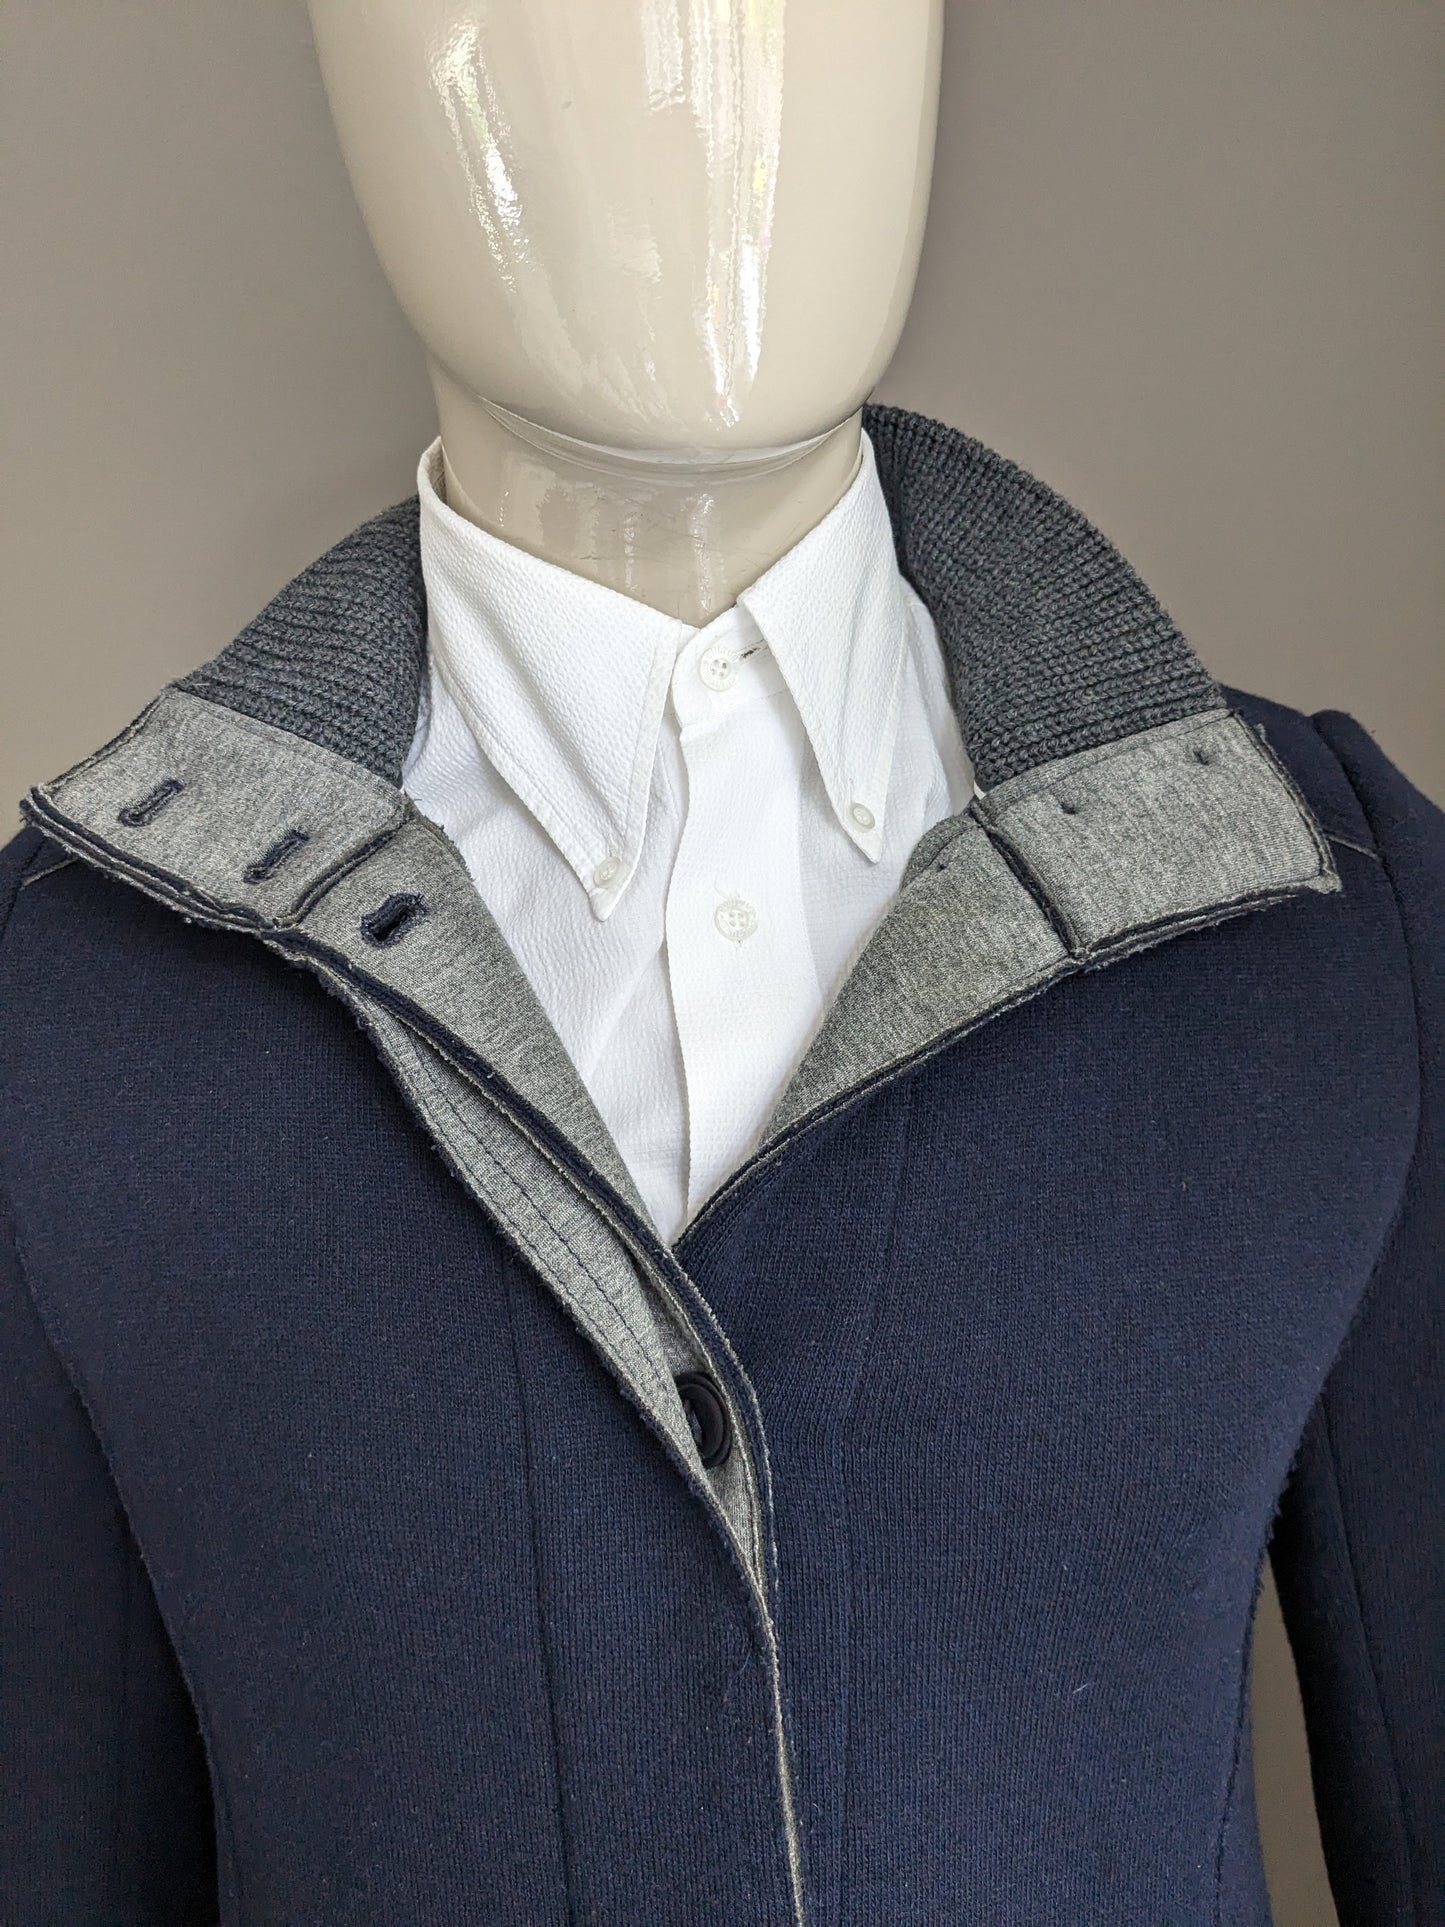 Marc O'Polo wool half -length jacket. Dark blue gray colored. Size M.